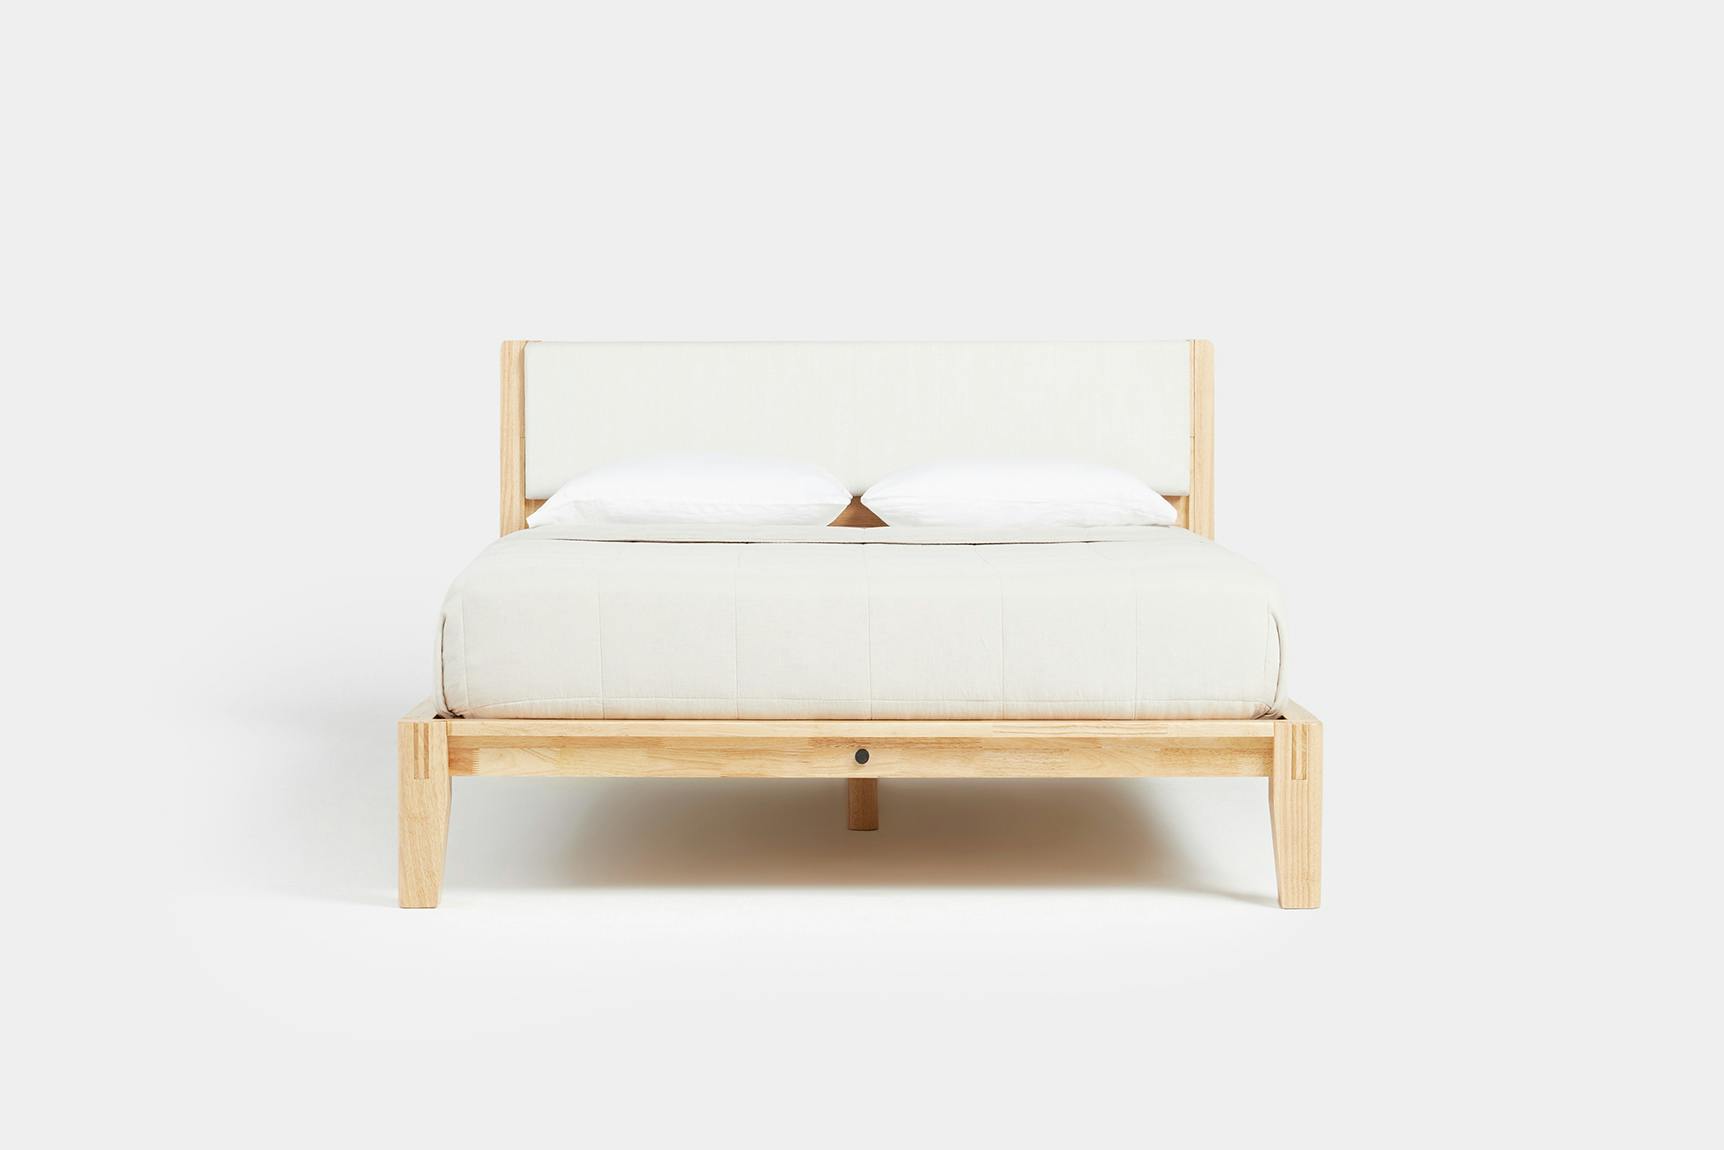 The Bed + Headboard + Cushion